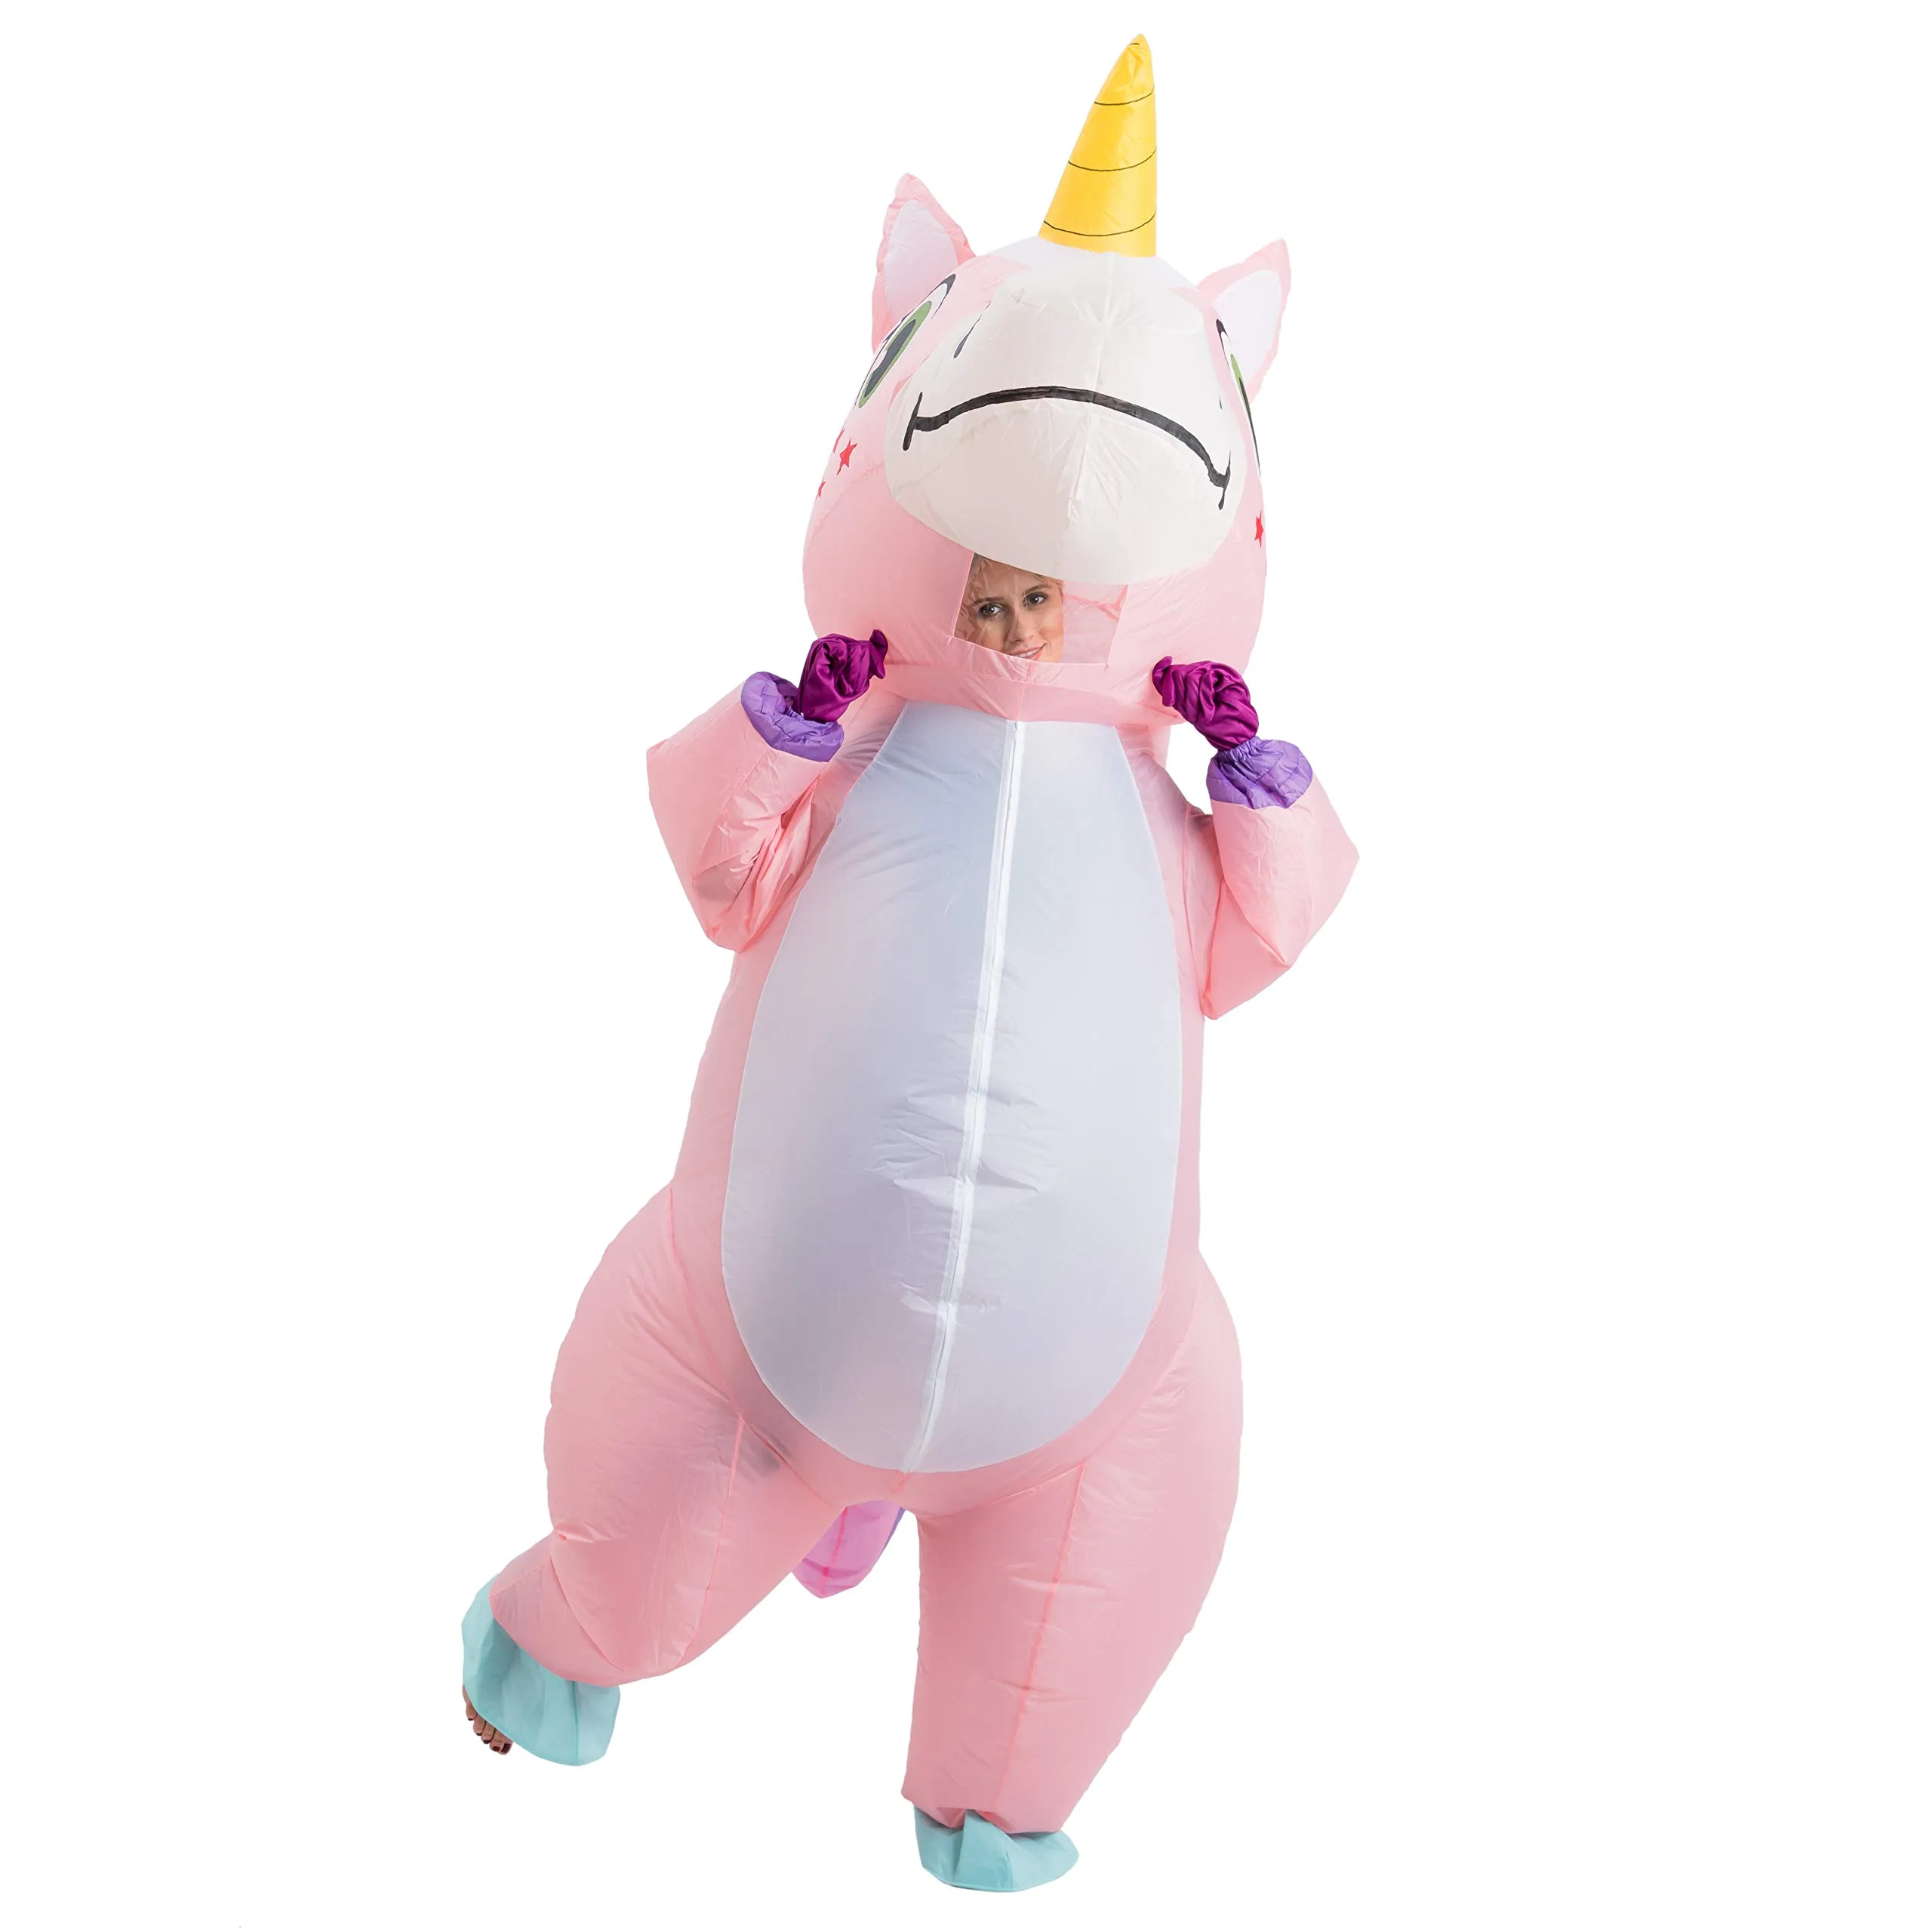 Adult unicorn inflatable animal costumes